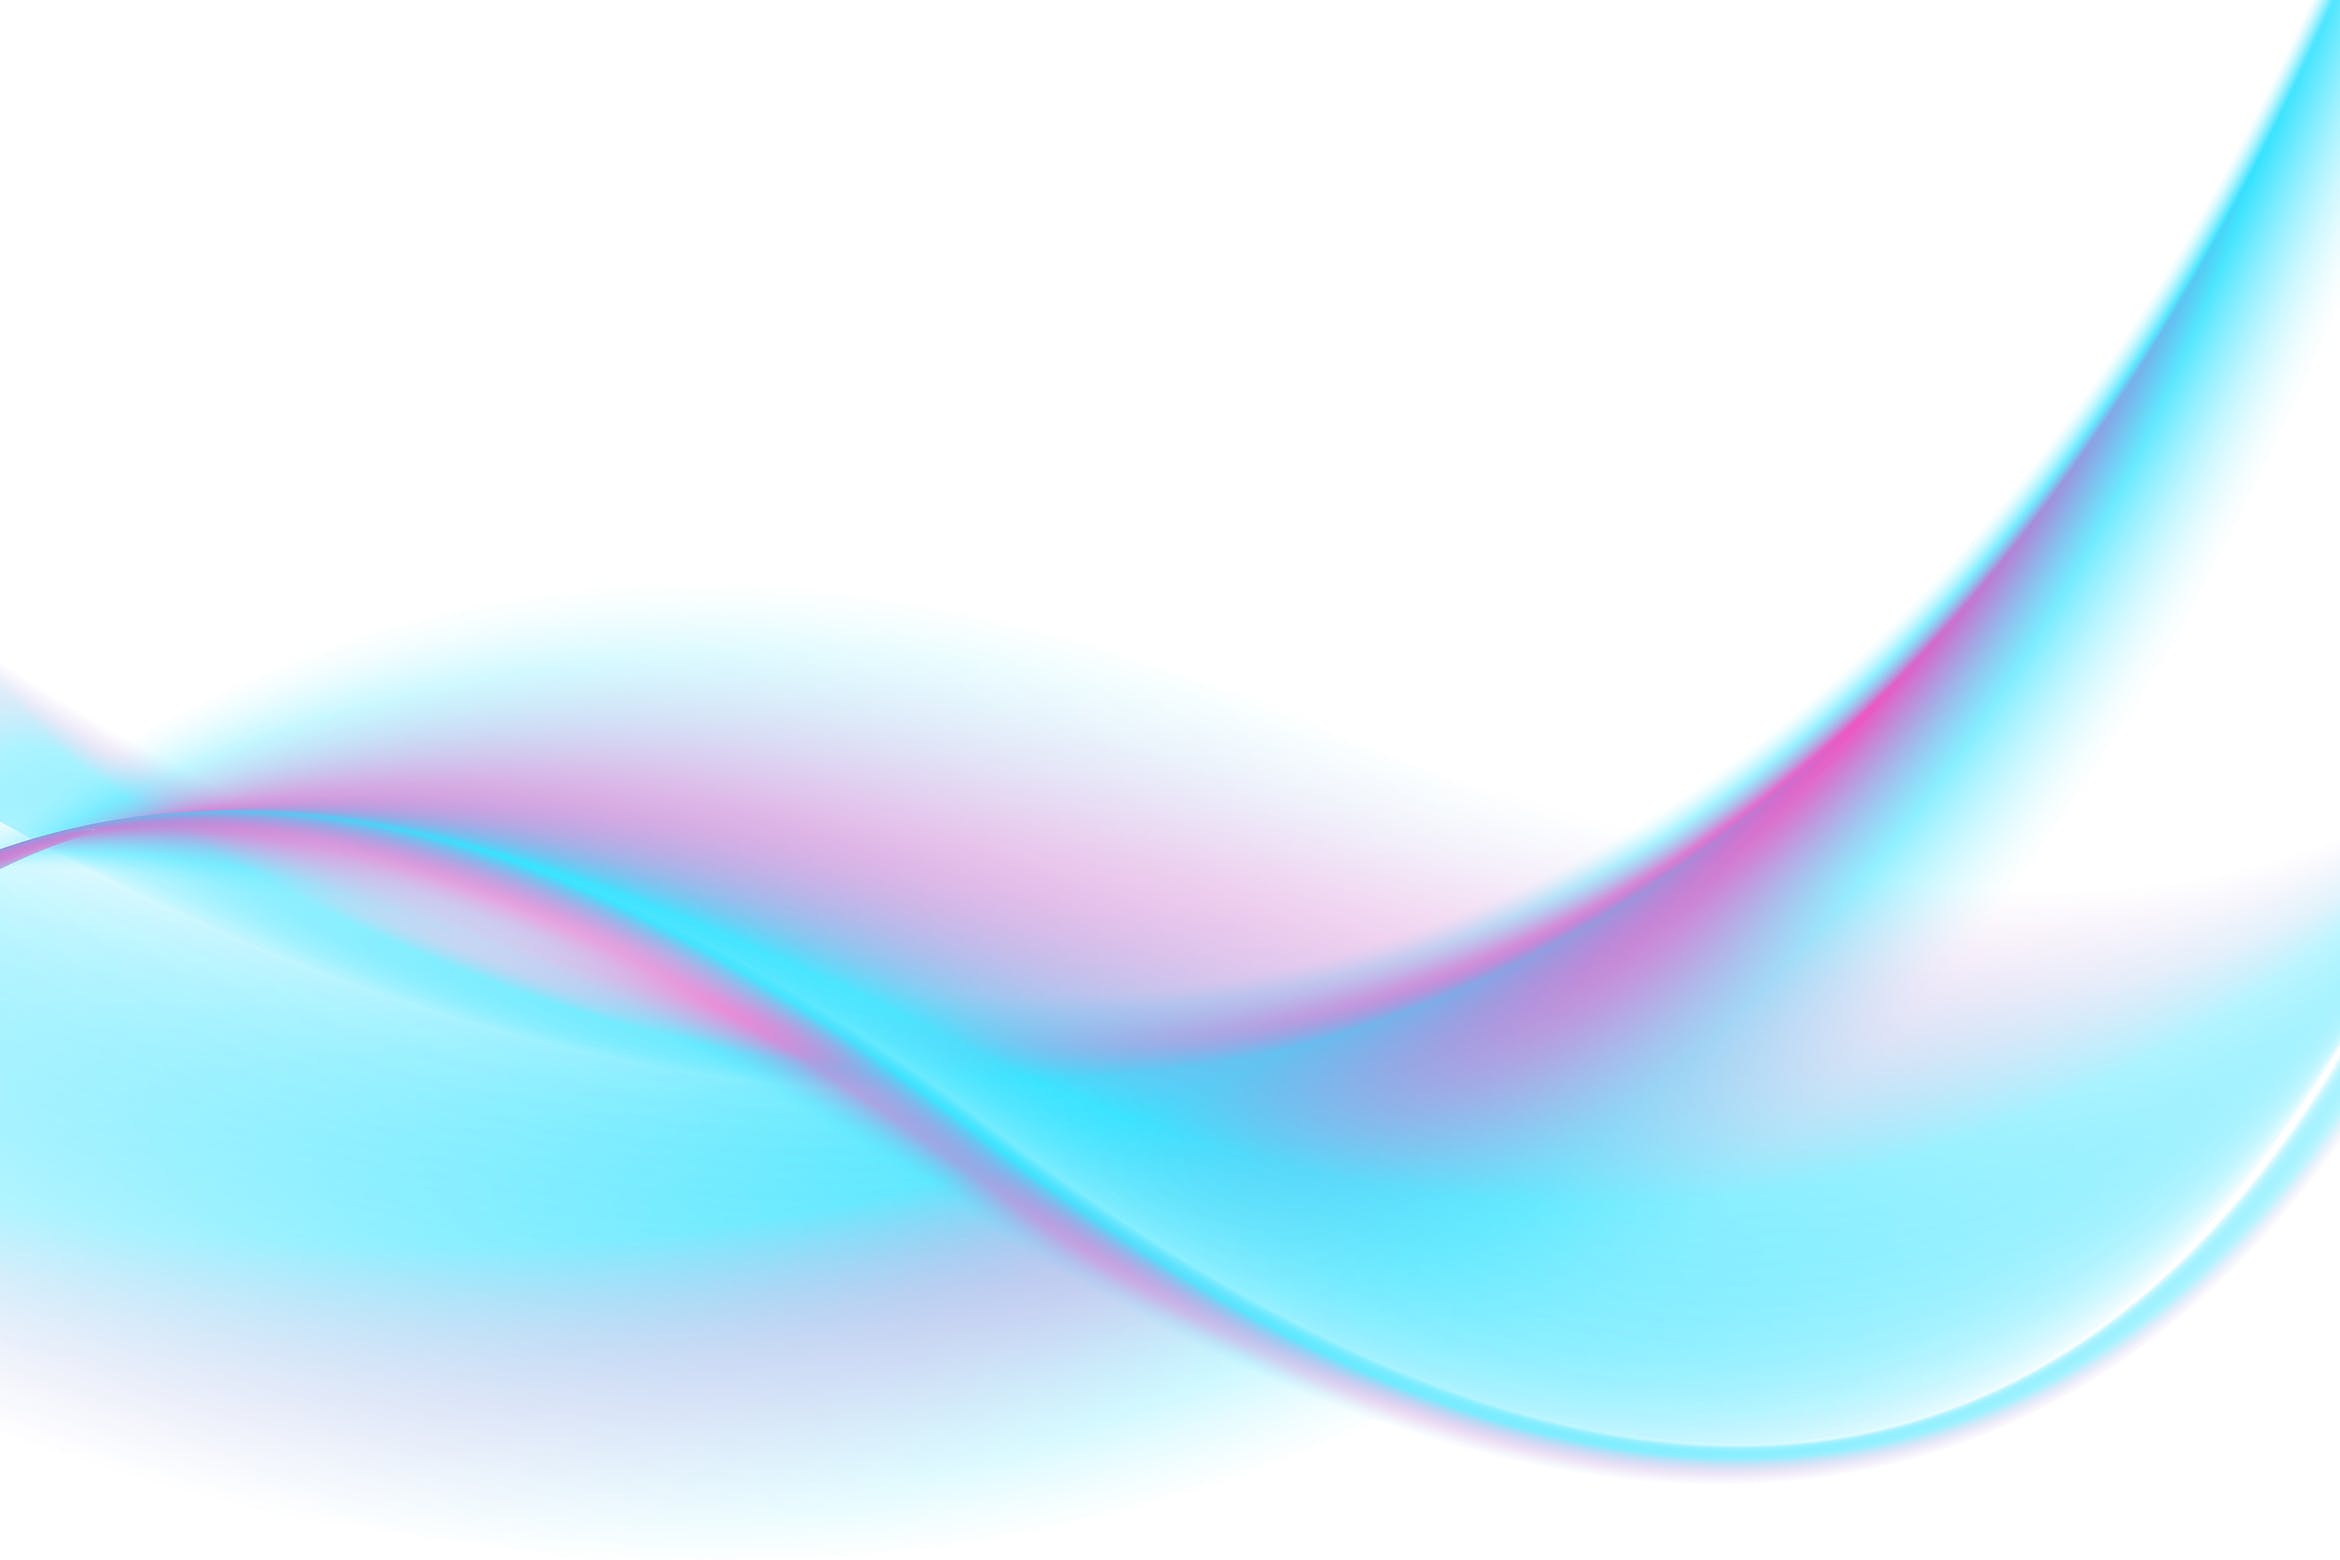 抽象平滑流动波纹背景图素材 Abstract smooth flowing waves background插图